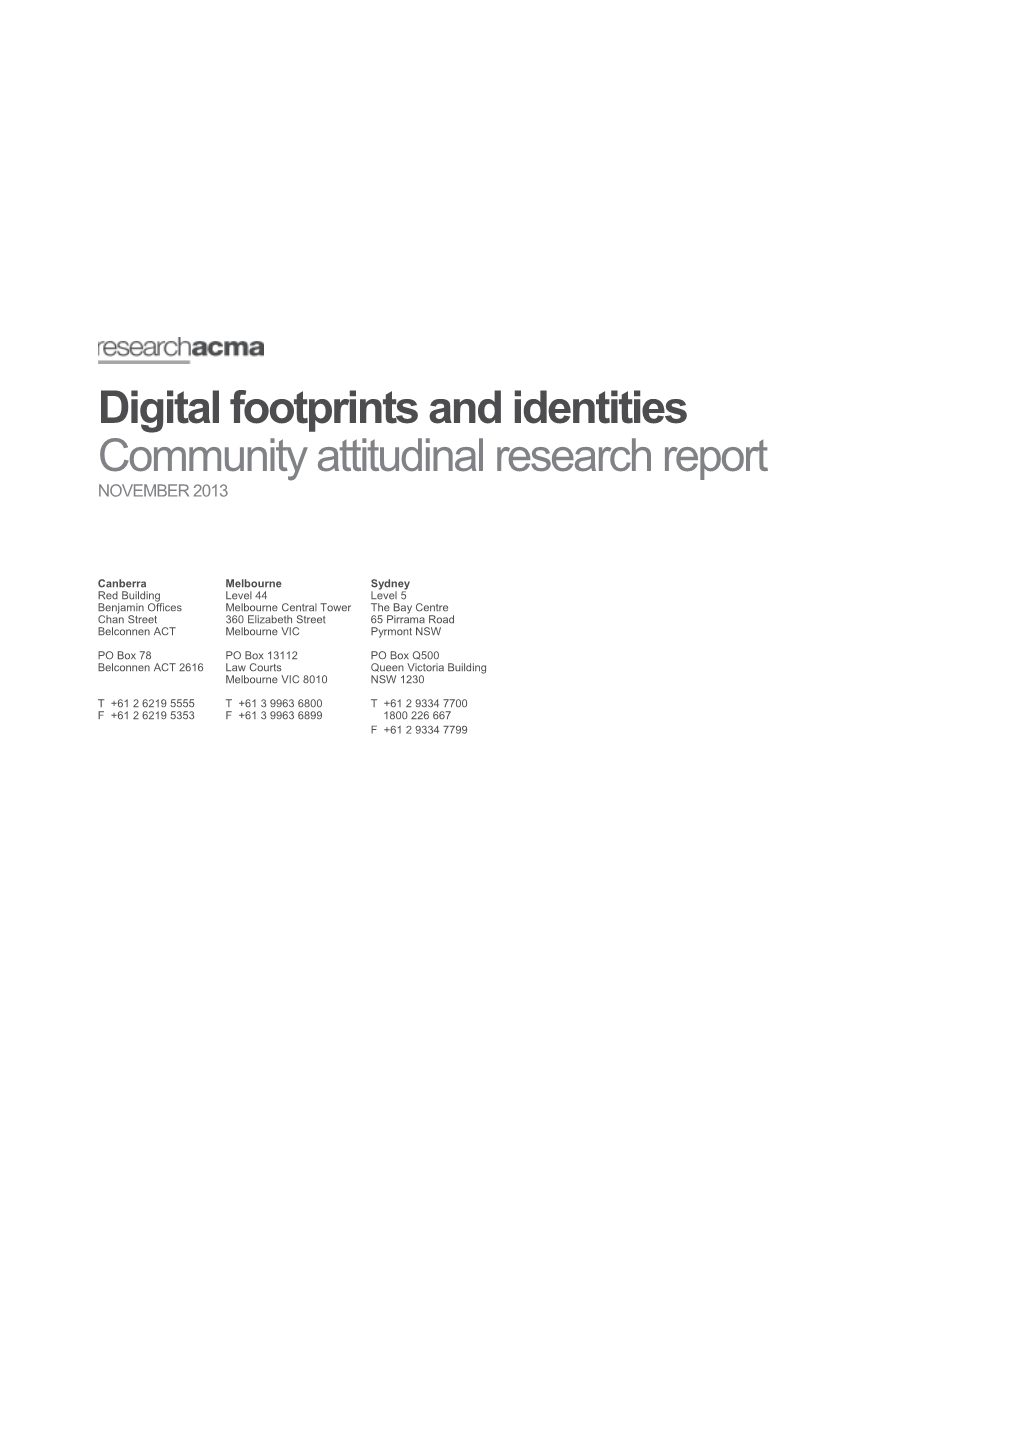 Digital Footprints and Identities Community Attitudinal Research